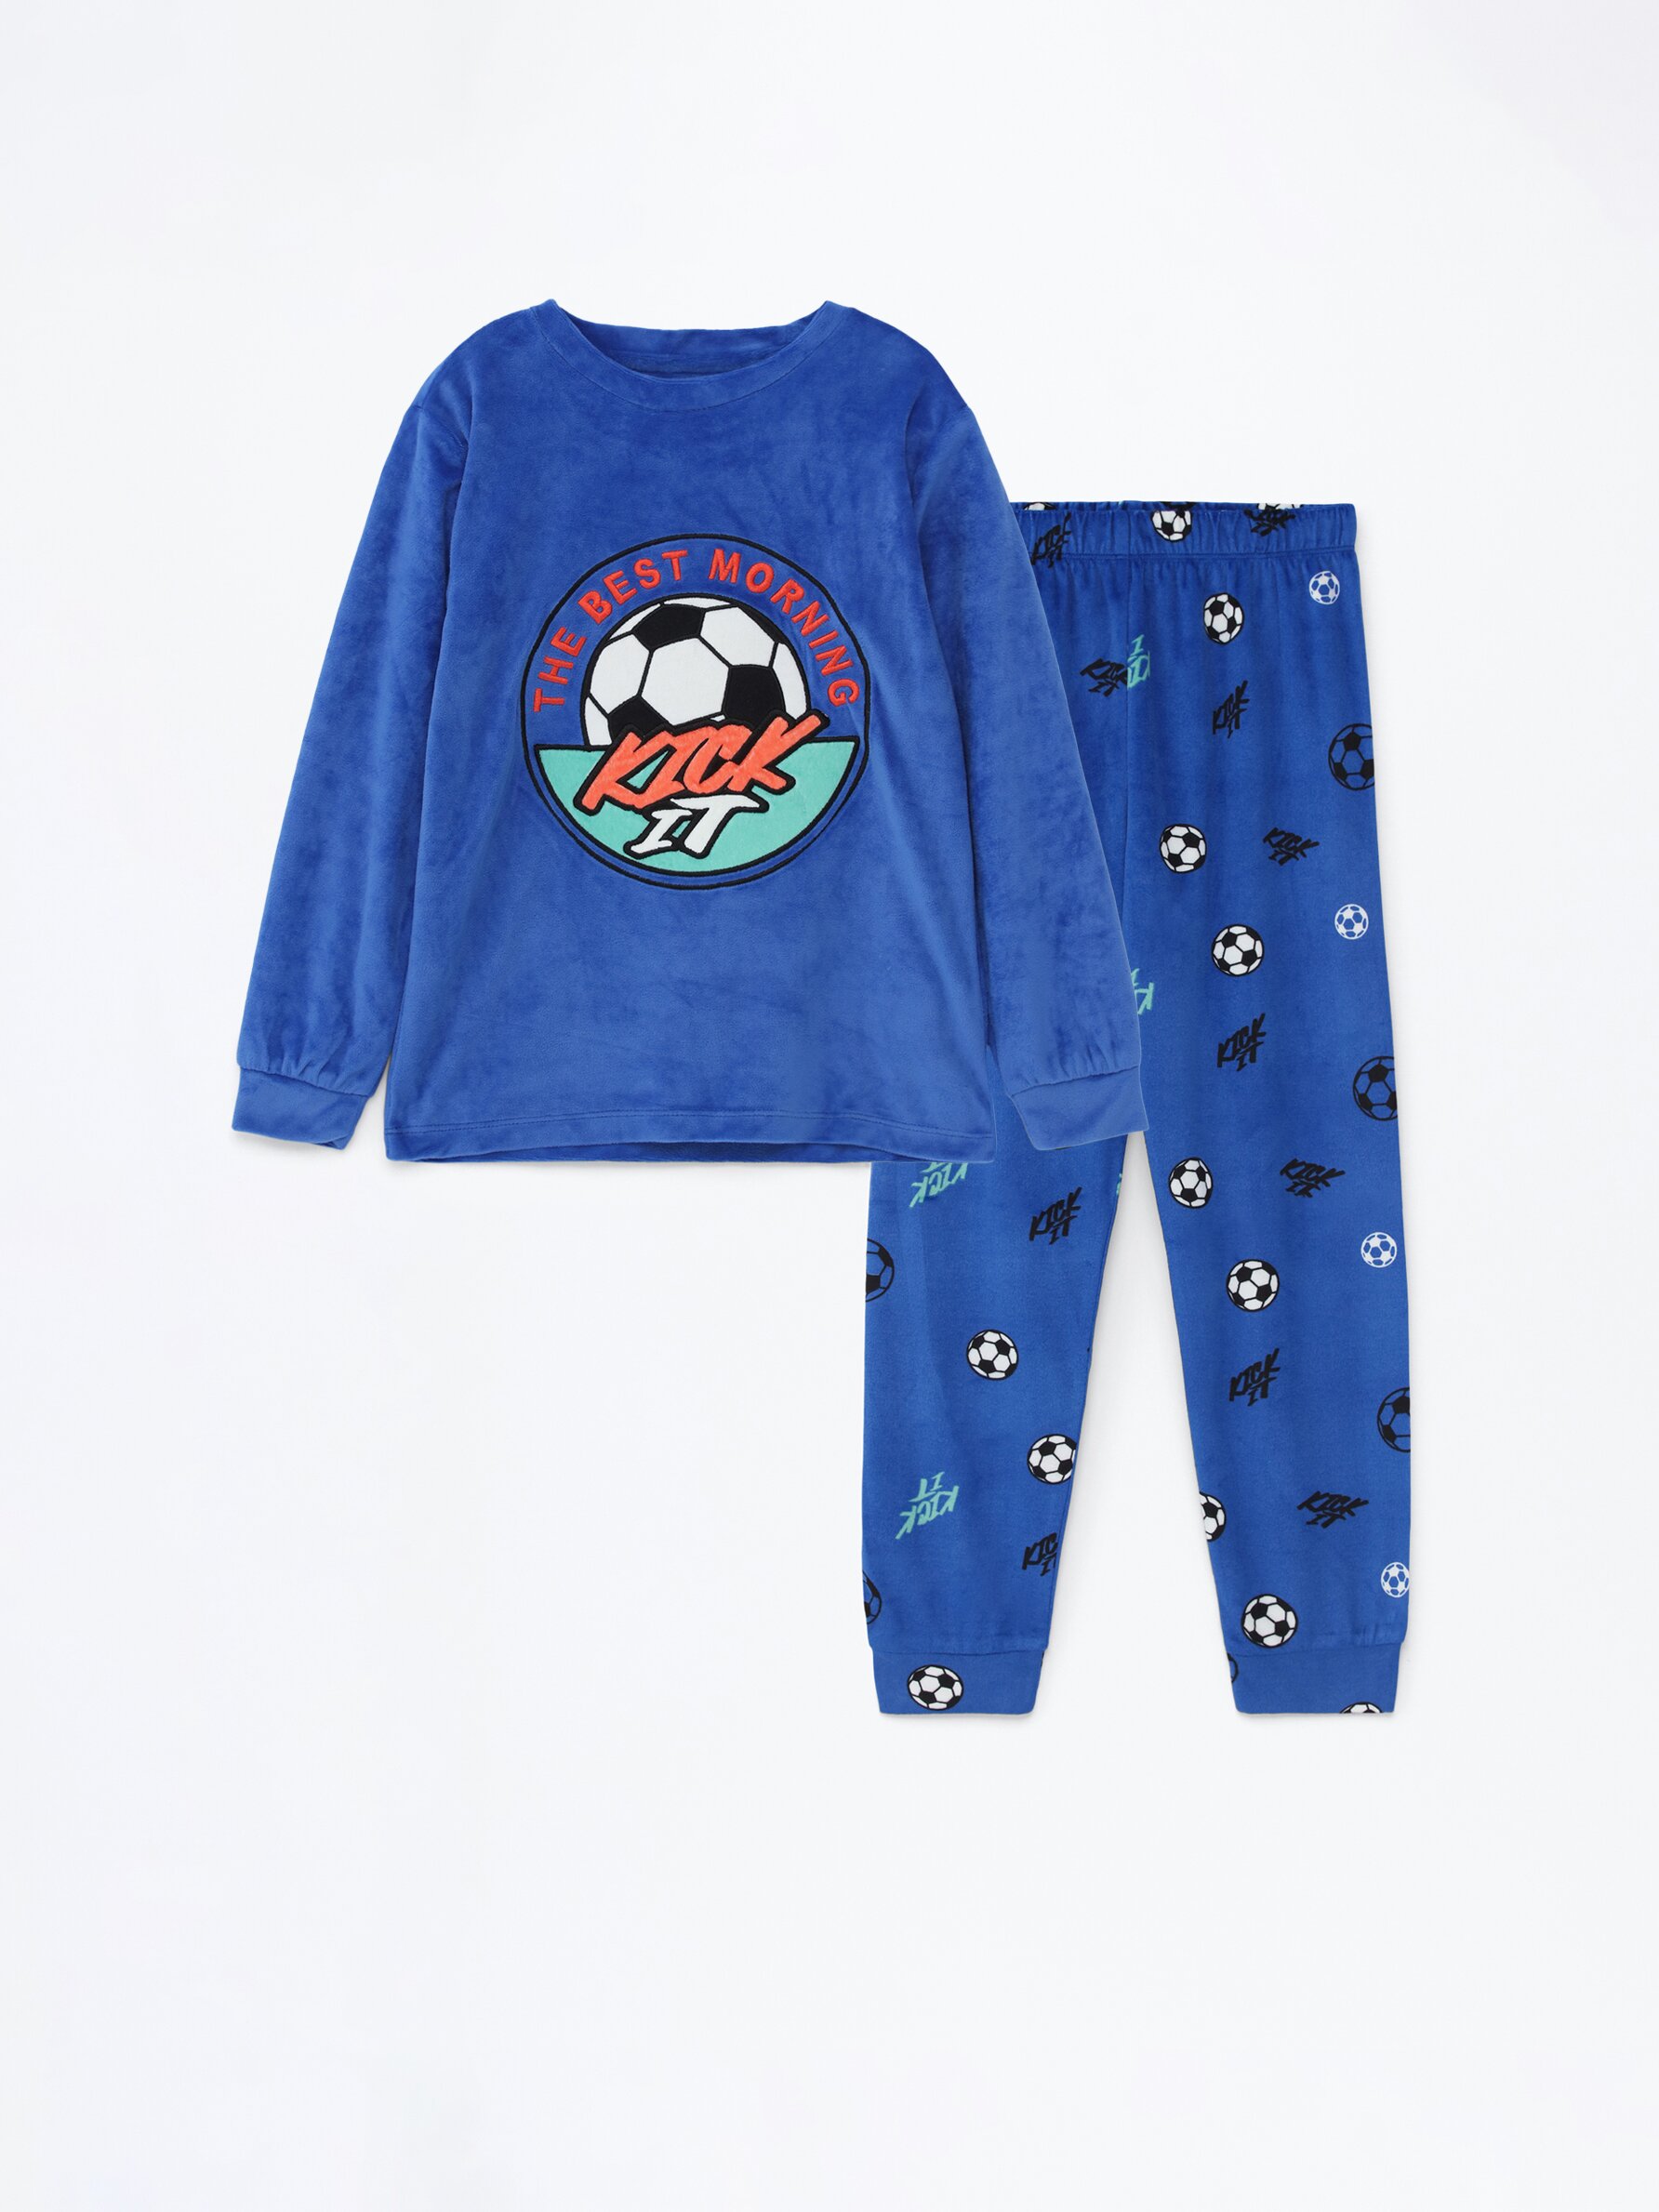 Conjunto de pijama de pelito estampado fútbol - Pijamas - ROPA INTERIOR, PIJAMAS - Niño - Niños 